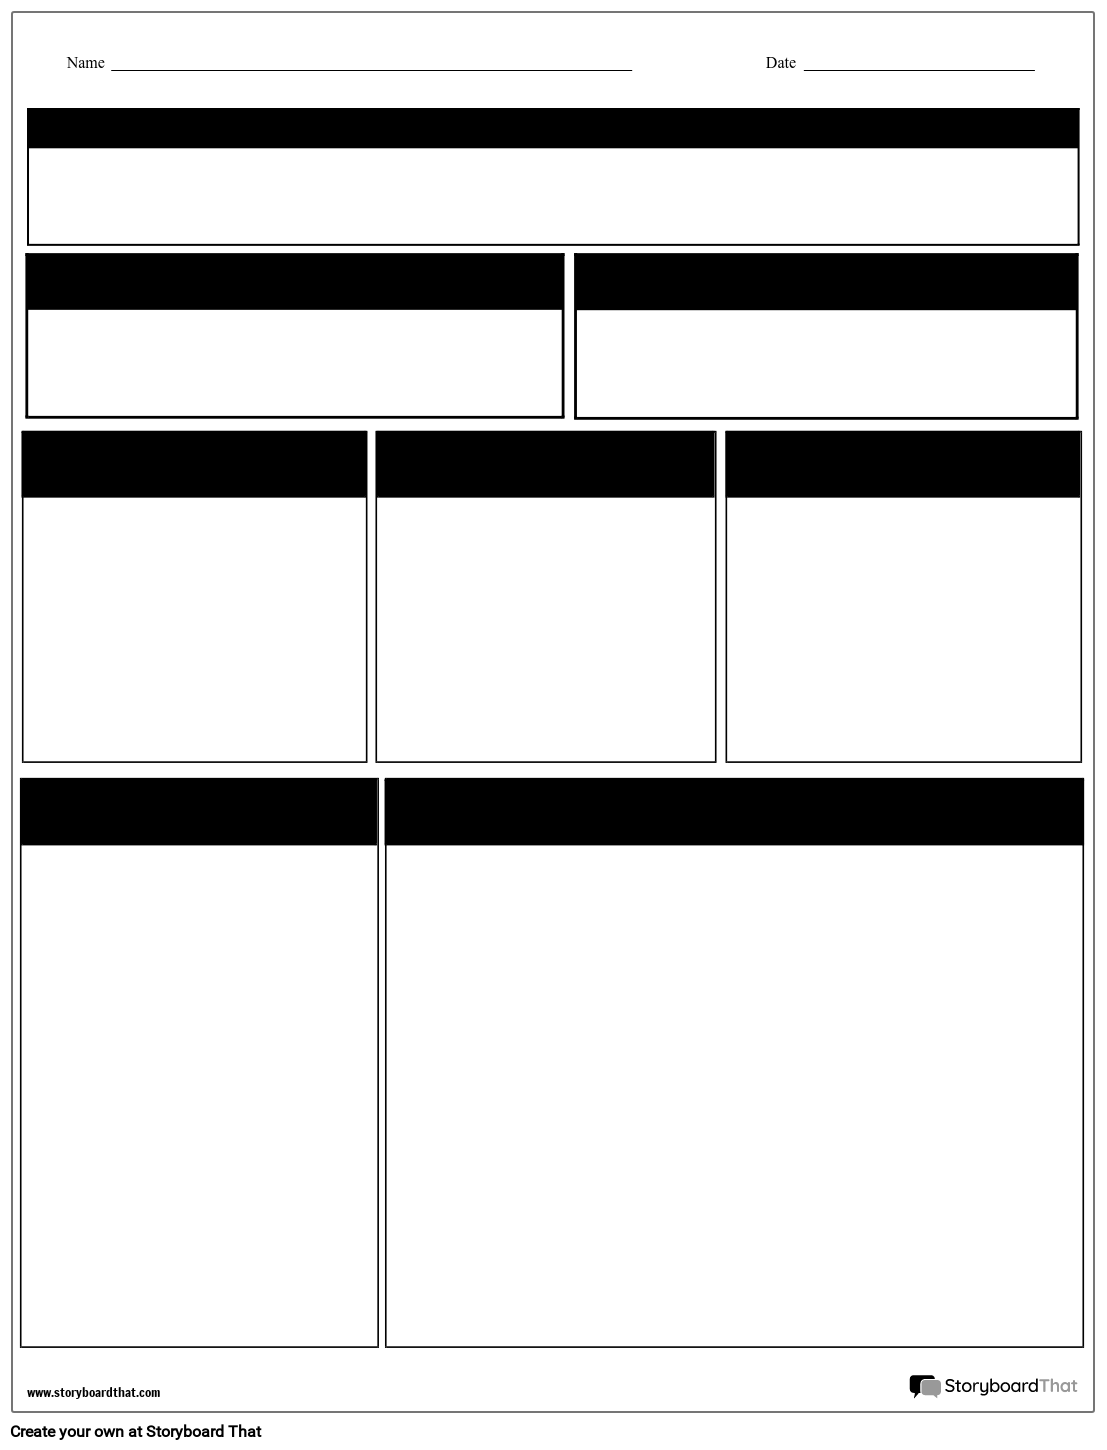 Foundation Experimental Design Sheet Storyboard Throughout Designing An Experiment Worksheet